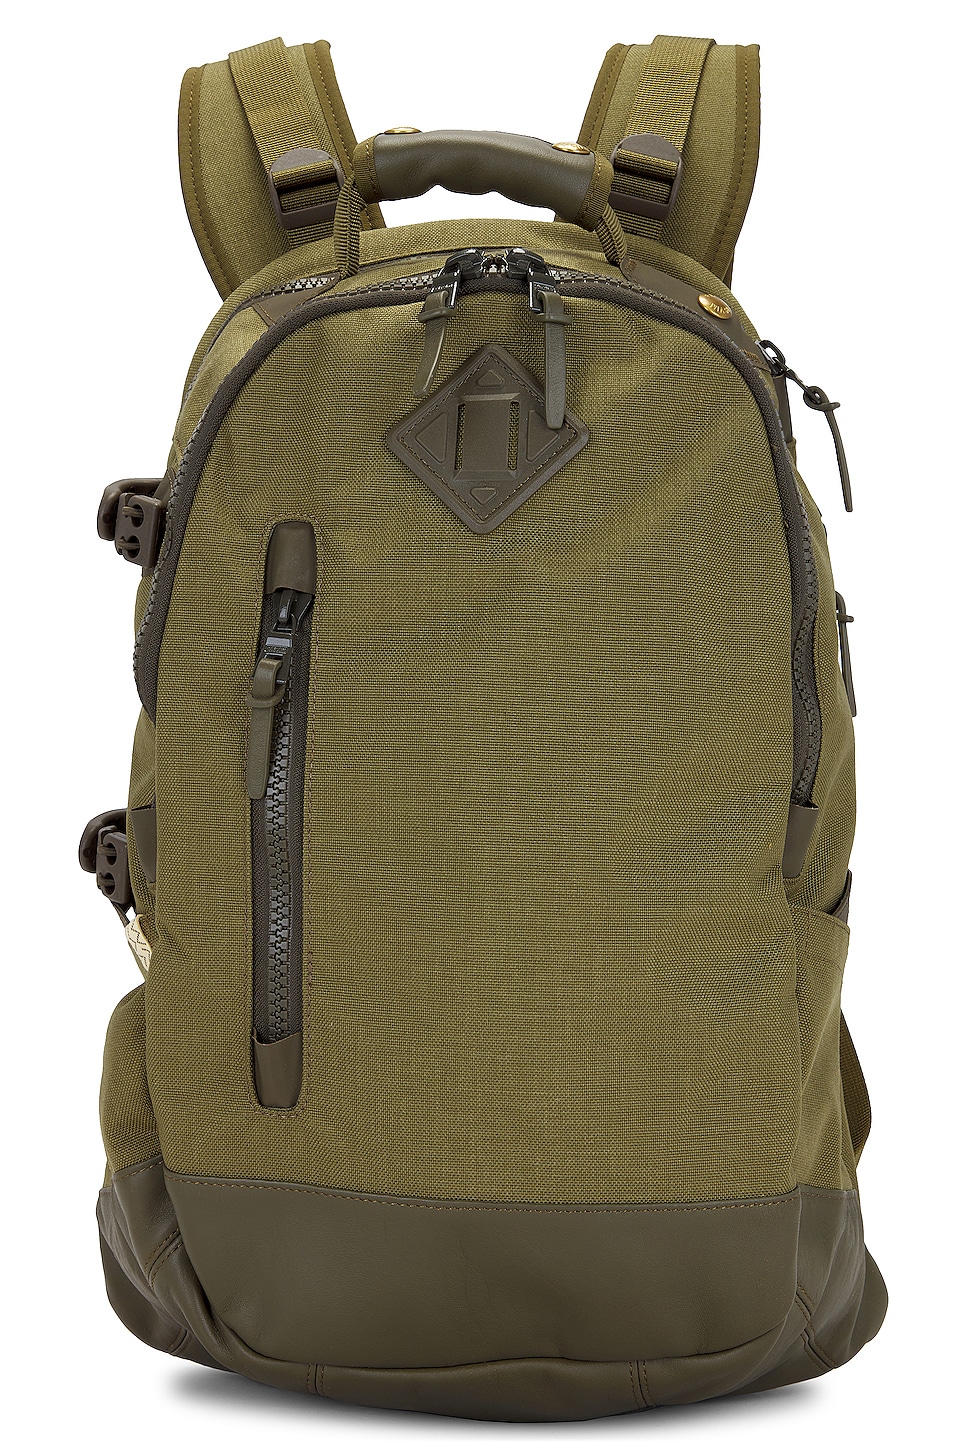 Cordura 20l Backpack in Green